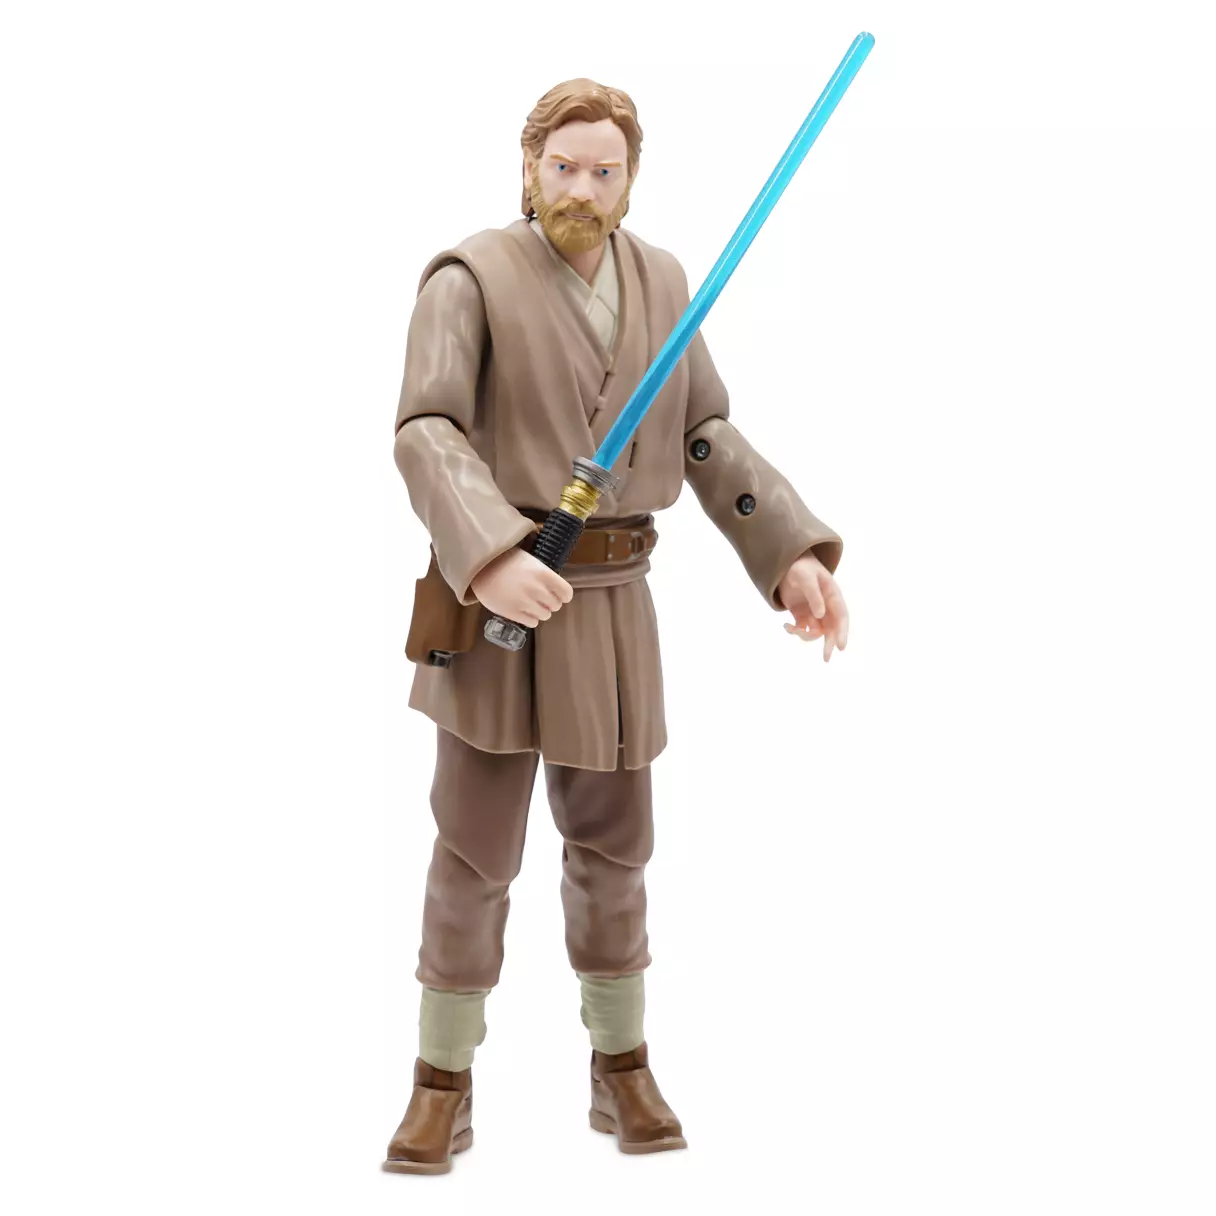 OWK Obi-Wan (Ben) Kenobi Talking Figure 2